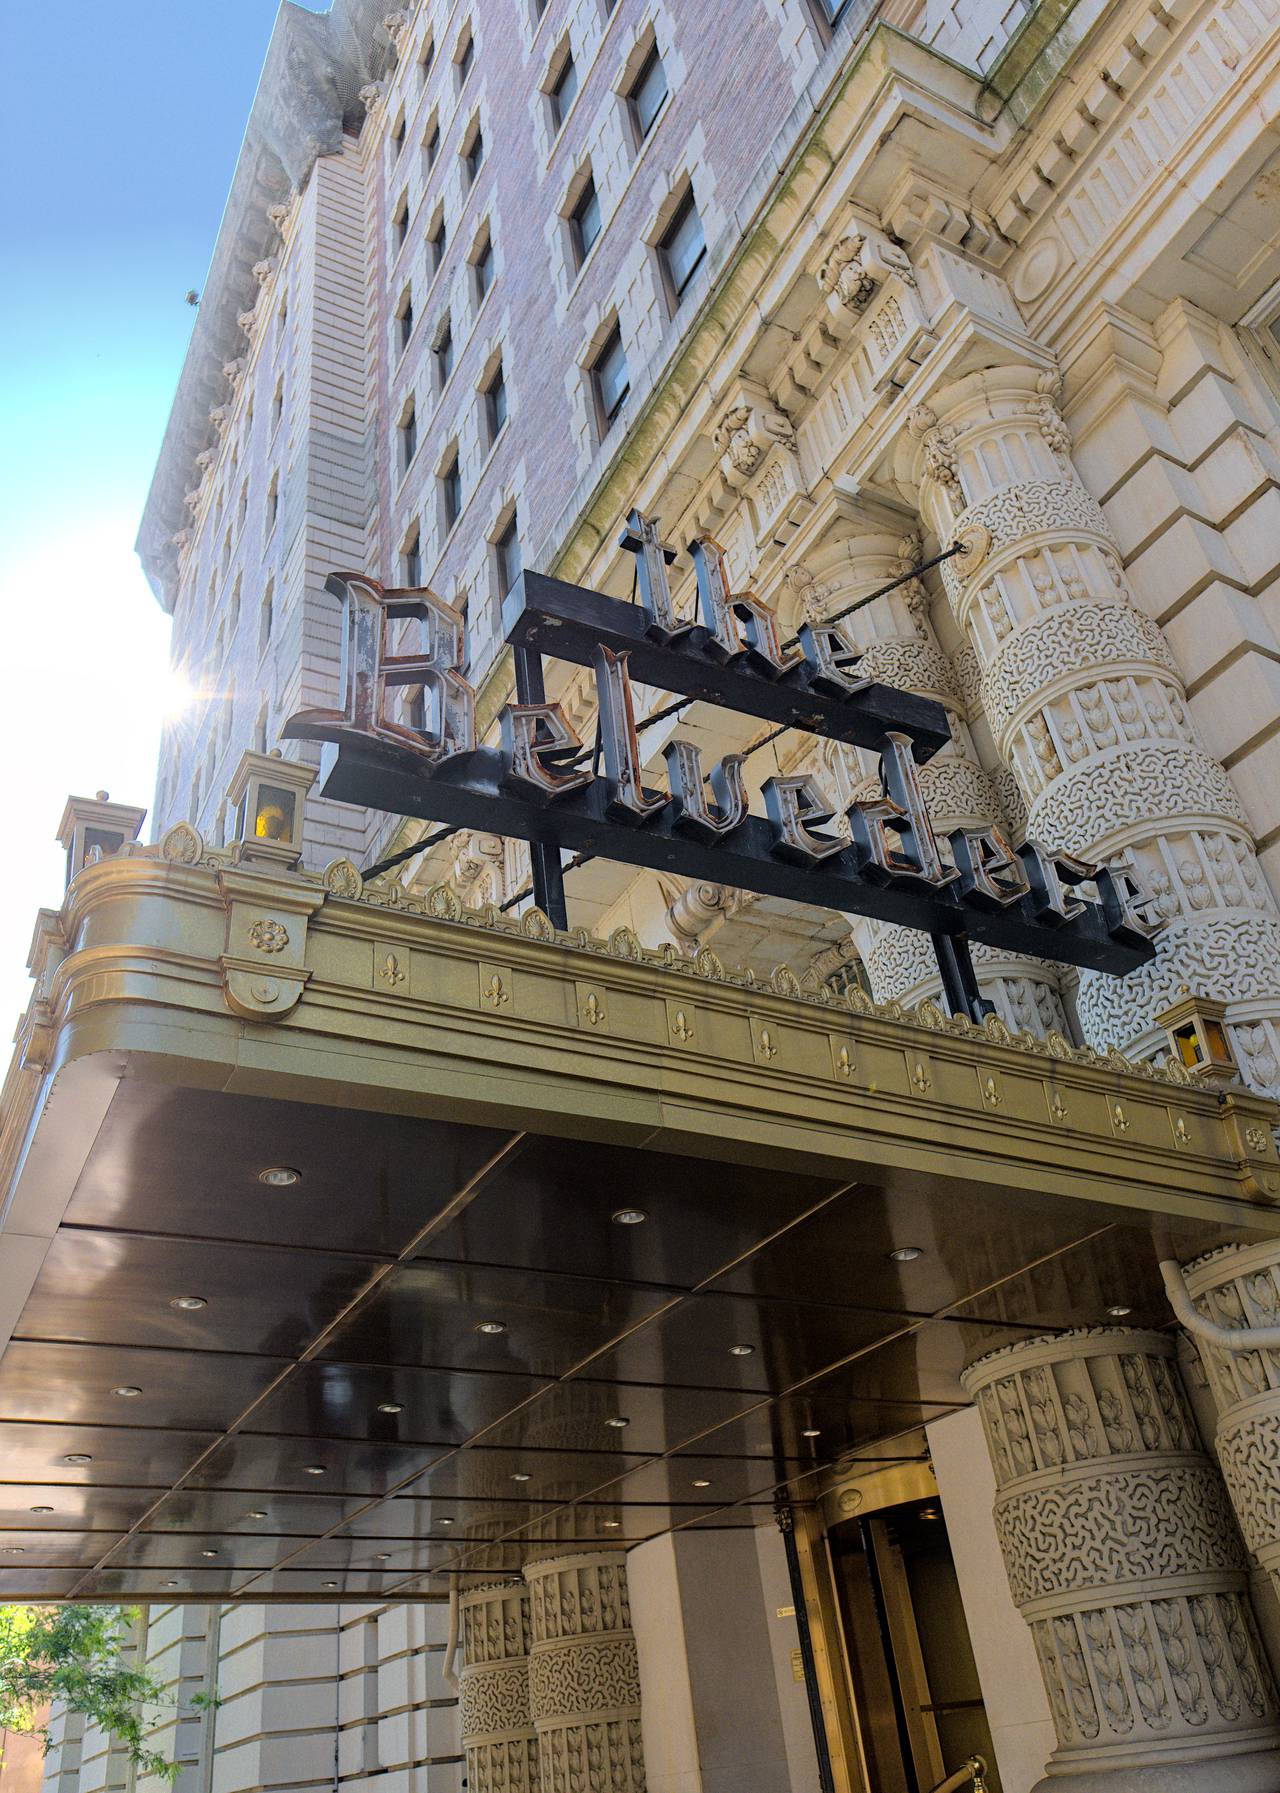 The Belvedere Hotel